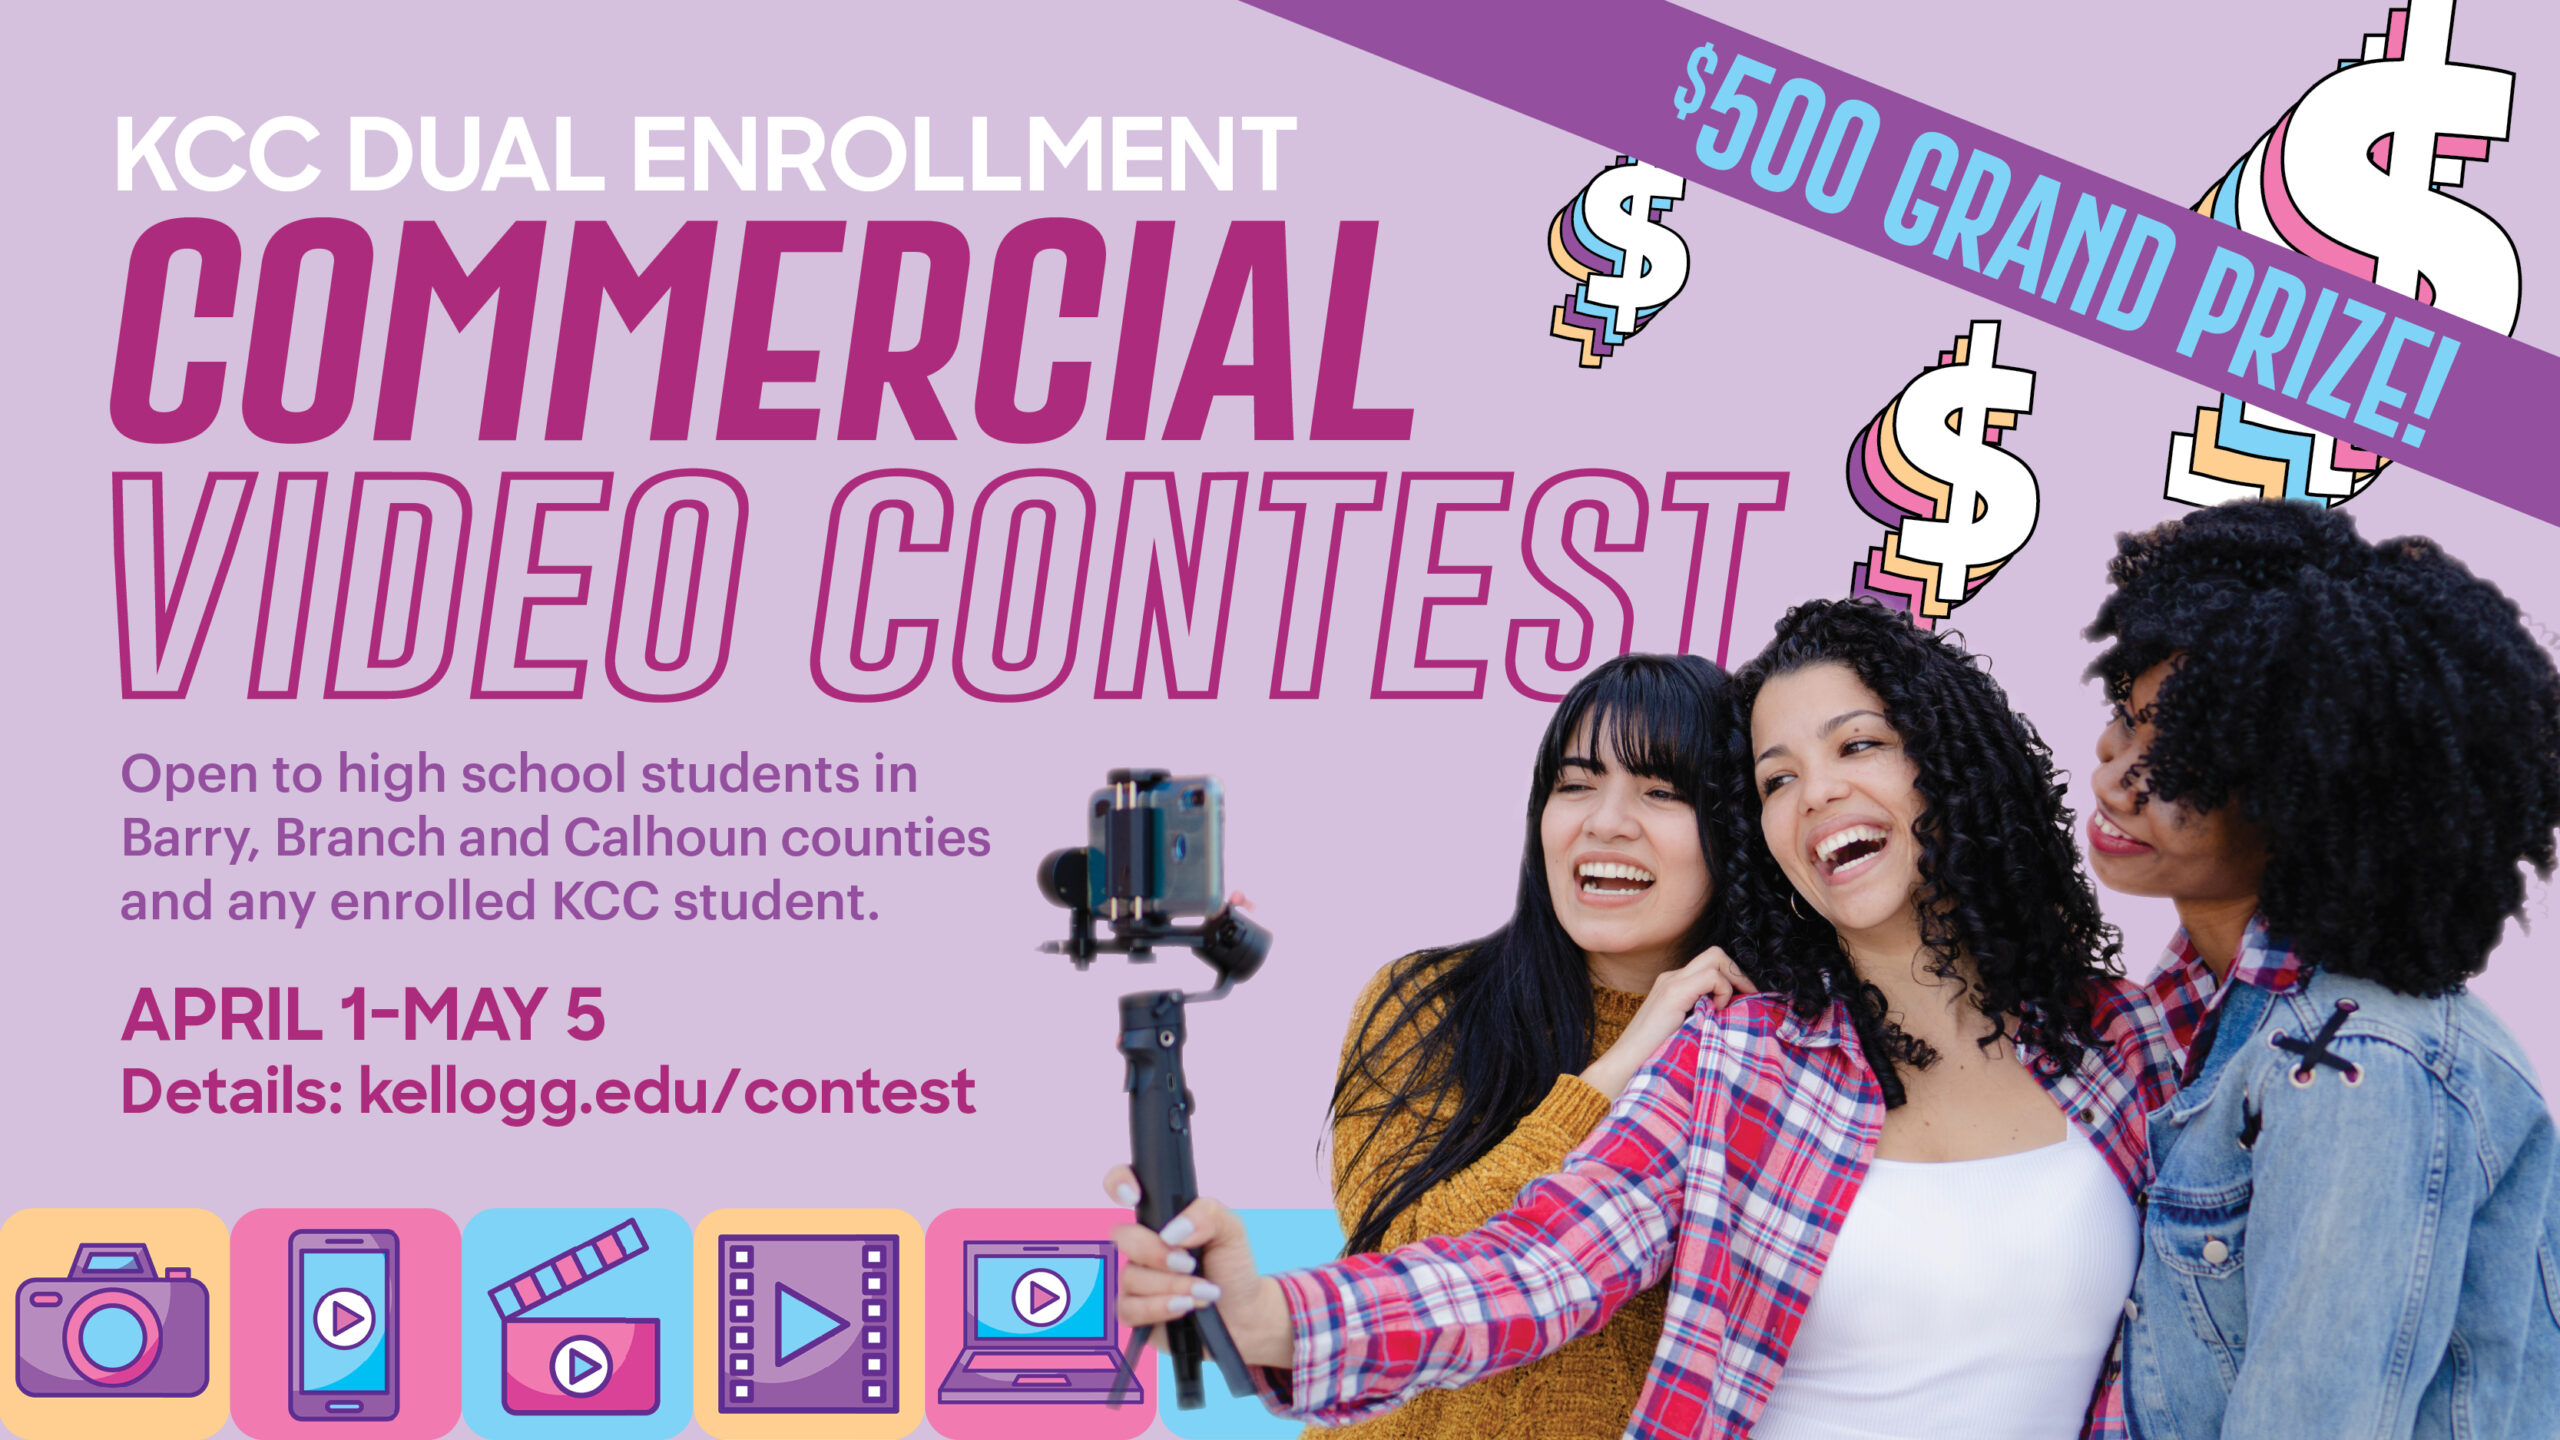 A graphic image announcing KCC Dual Enrollment Commercial Contest